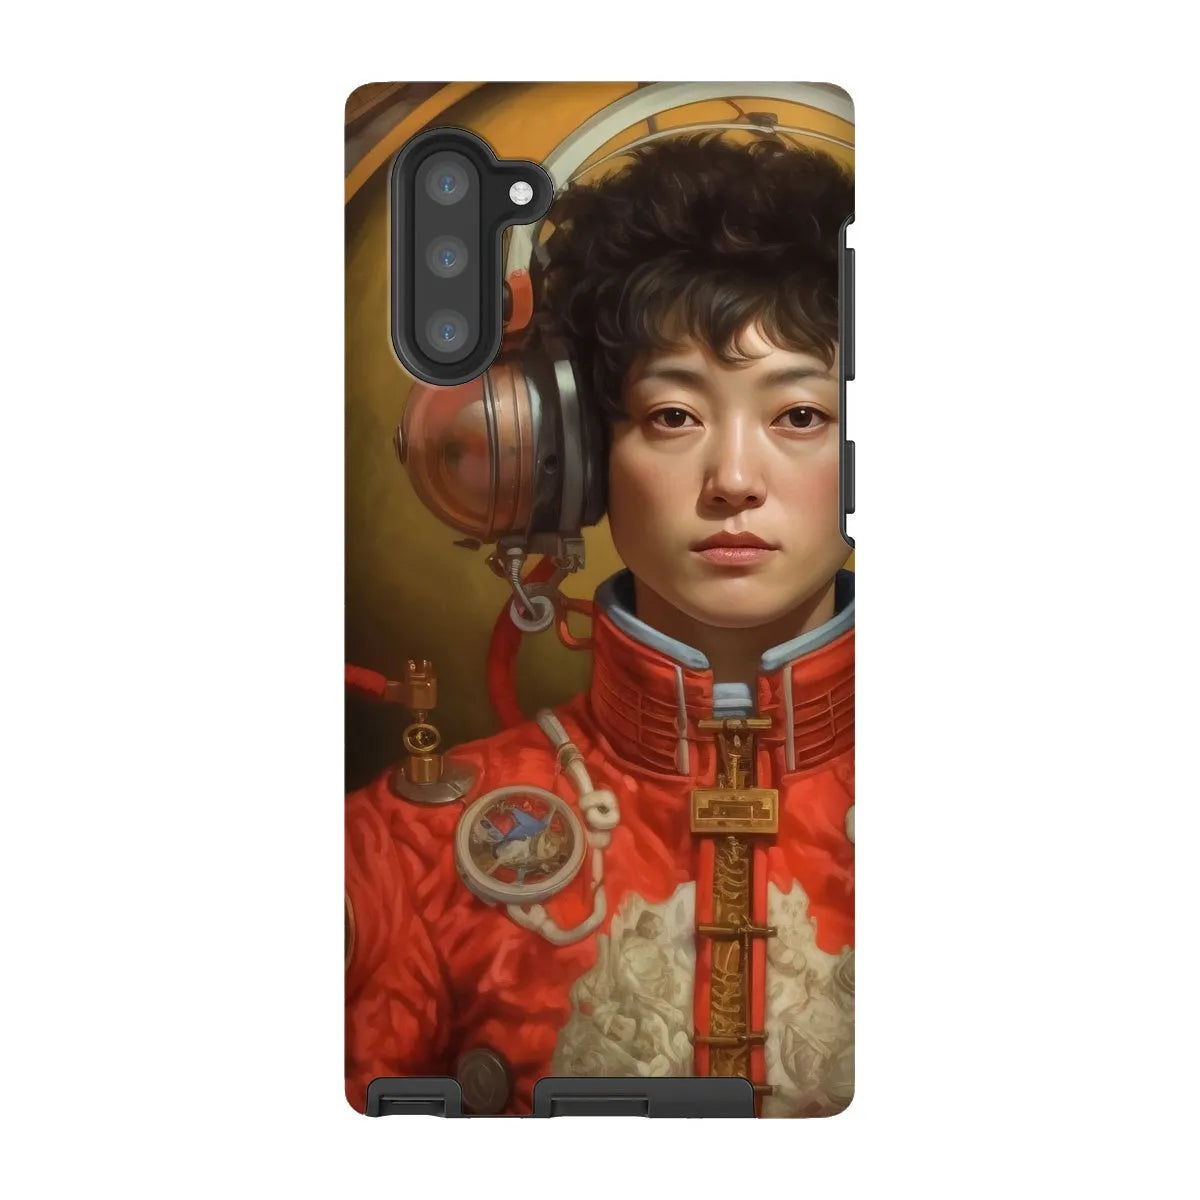 Mùchén The Gay Astronaut - Lgbtq Art Phone Case - Samsung Galaxy Note 10 / Matte - Mobile Phone Cases - Aesthetic Art